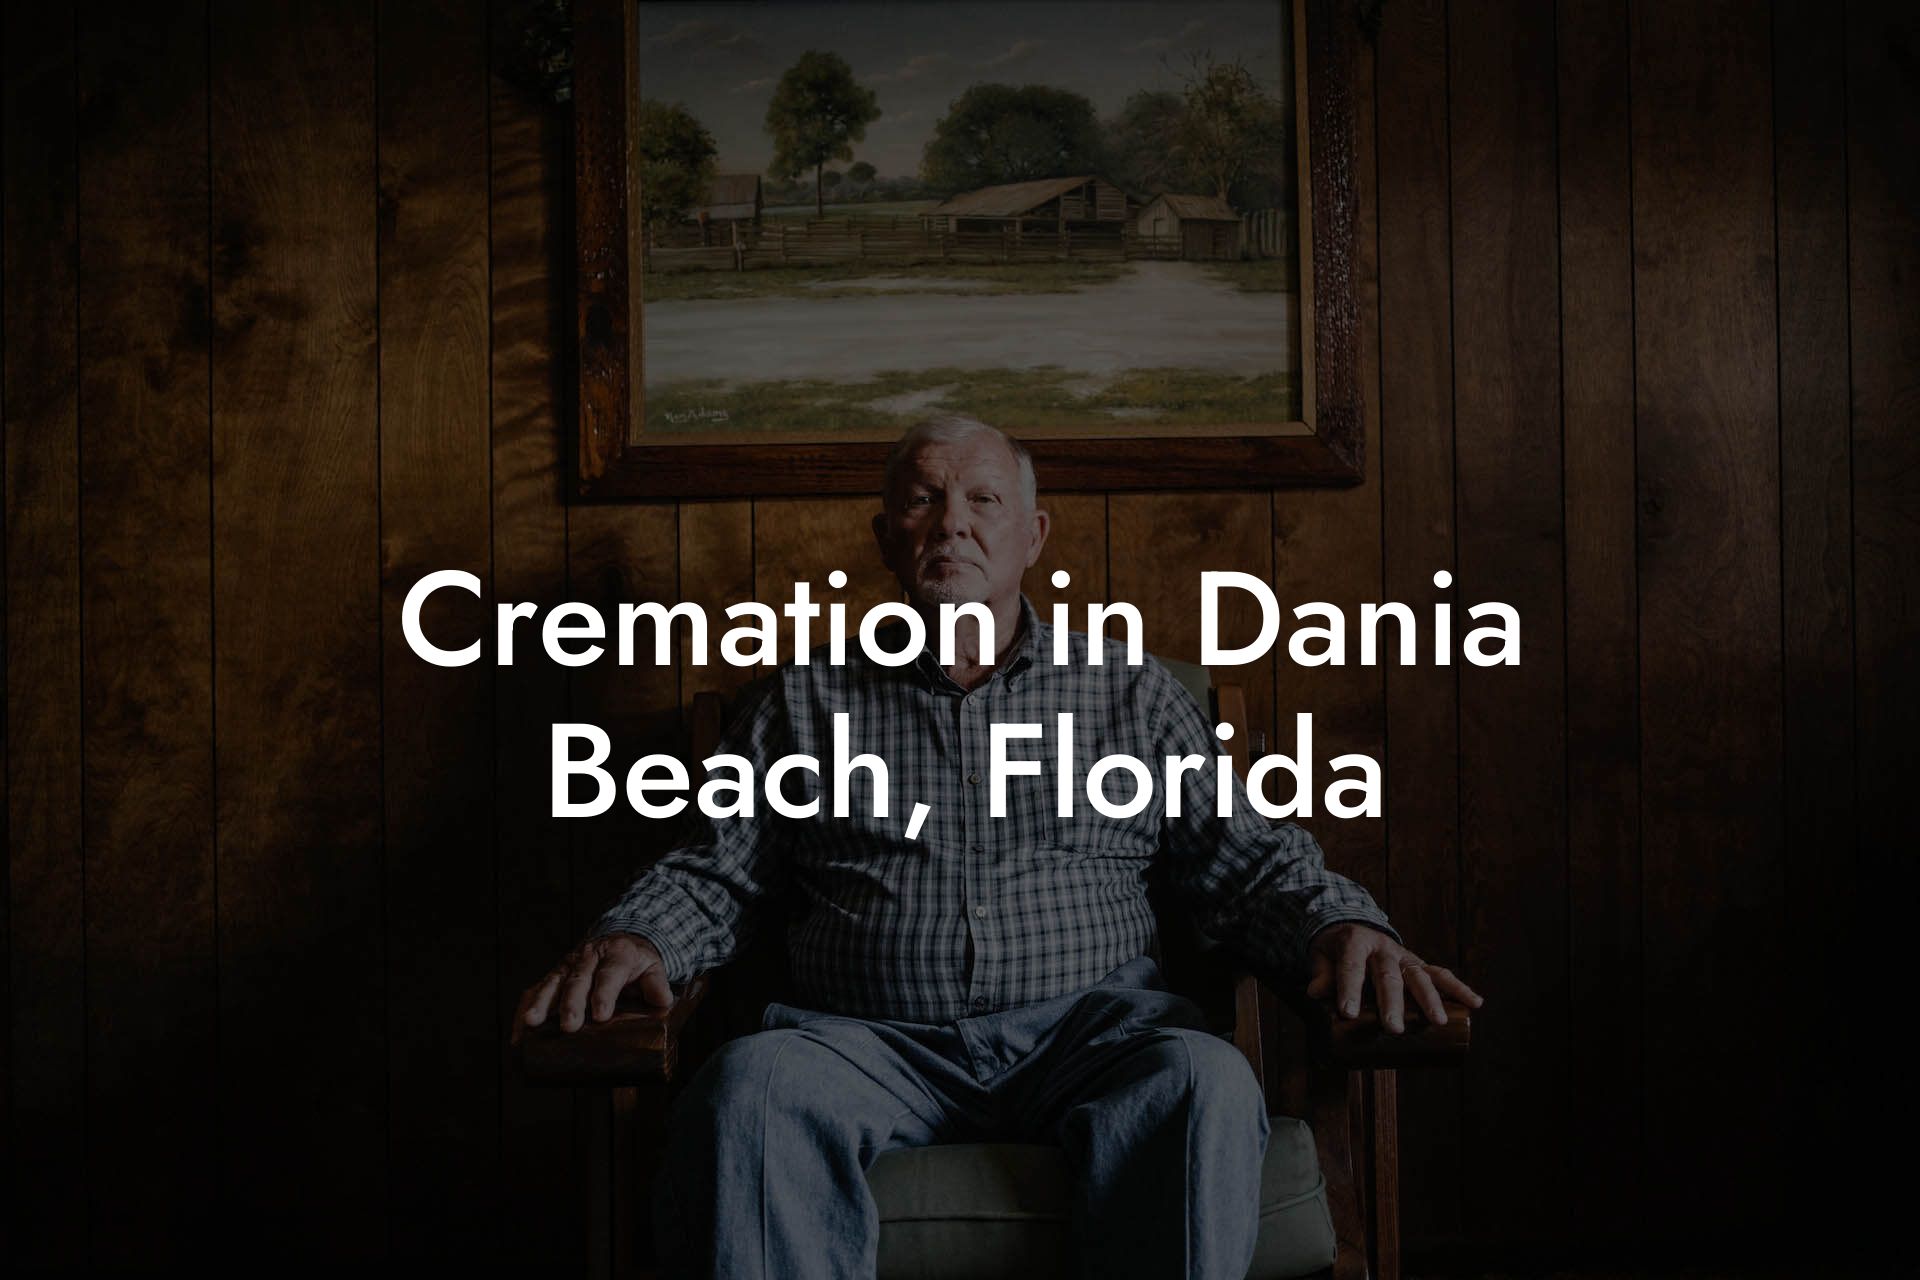 Cremation in Dania Beach, Florida